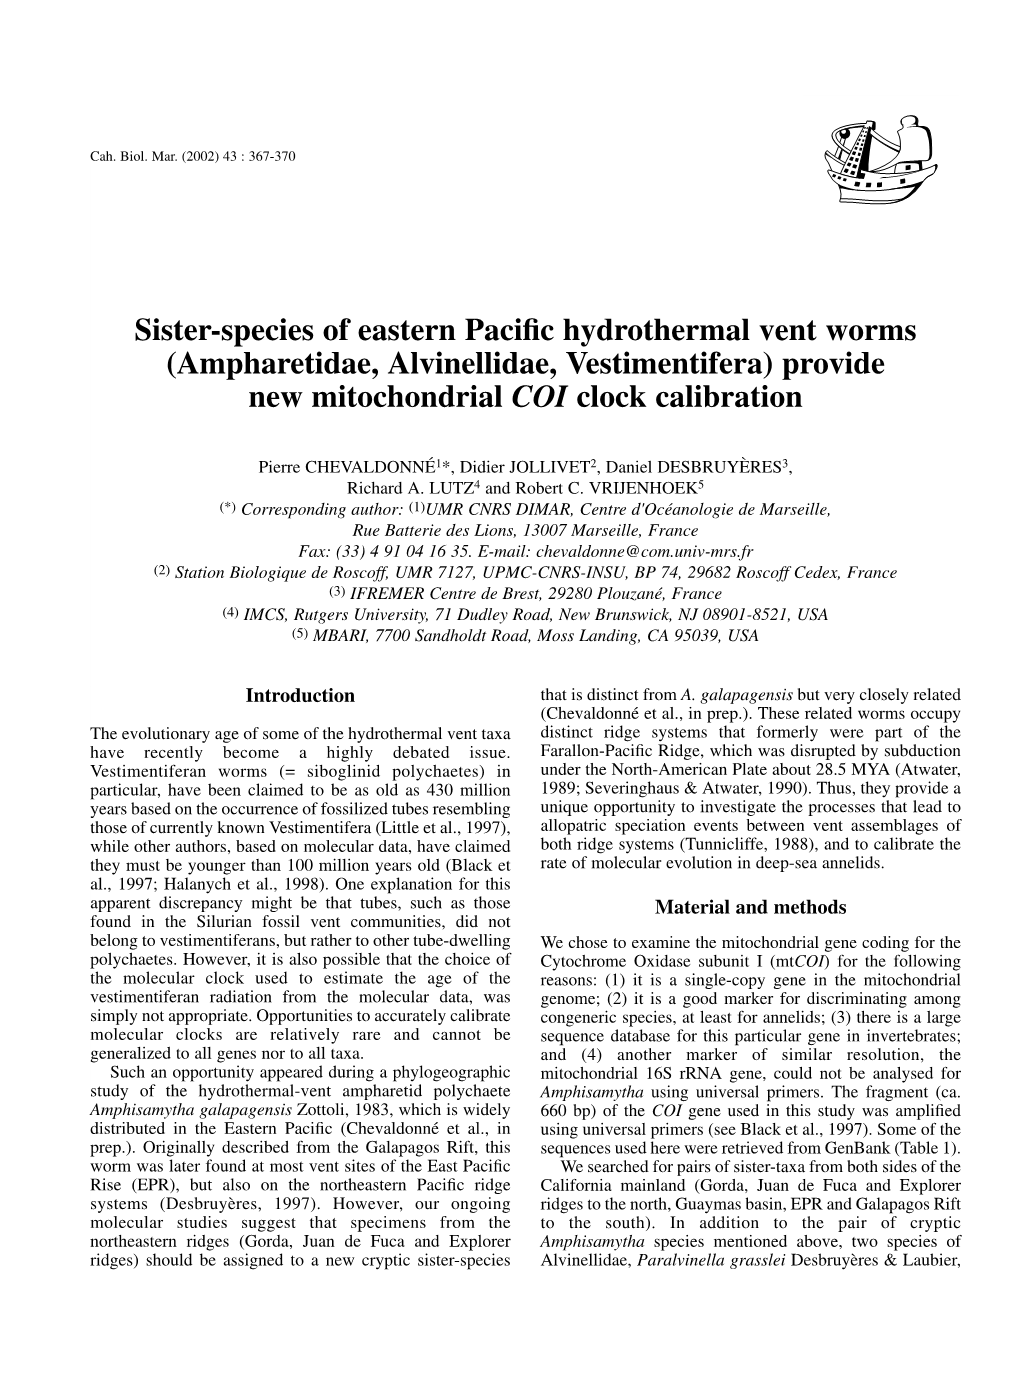 Ampharetidae, Alvinellidae, Vestimentifera) Provide New Mitochondrial COI Clock Calibration